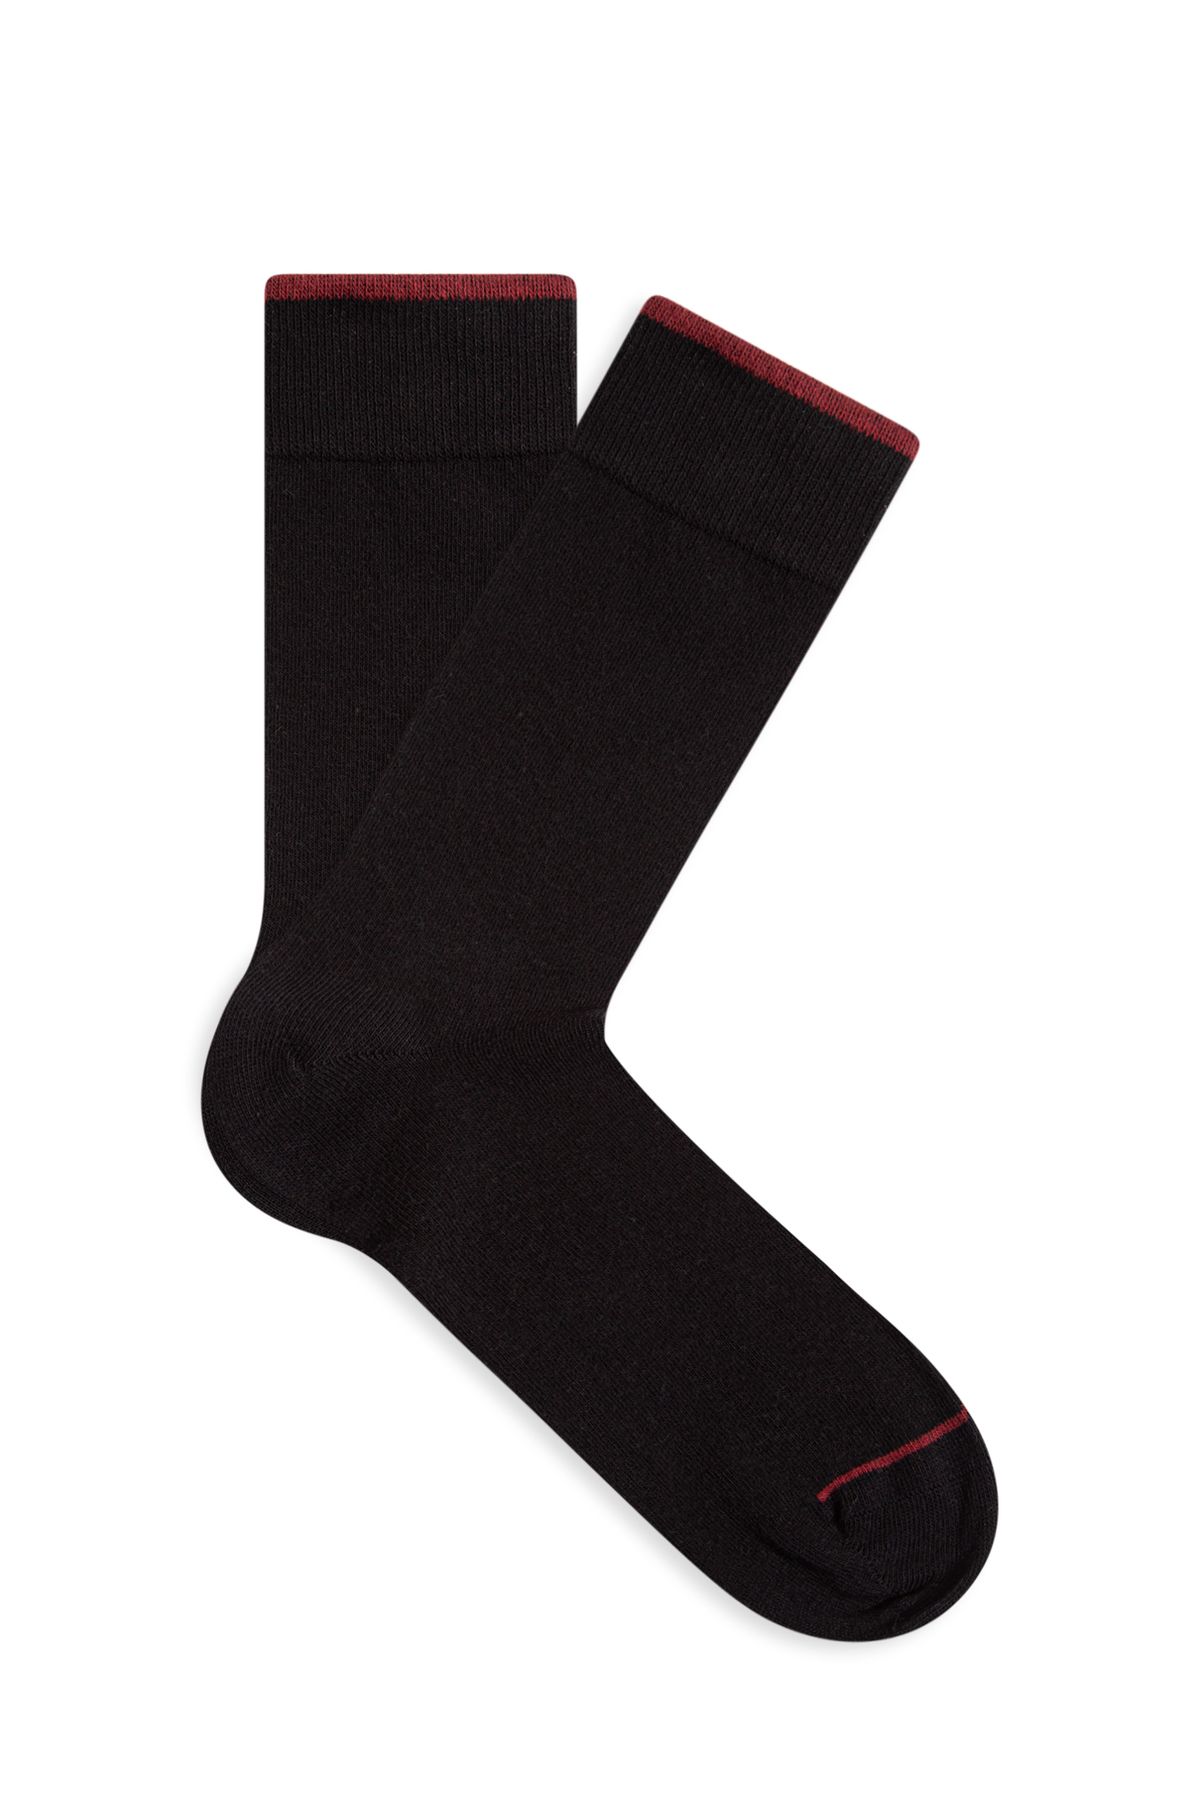 Mavi Siyah Soket Çorap 0910491-900